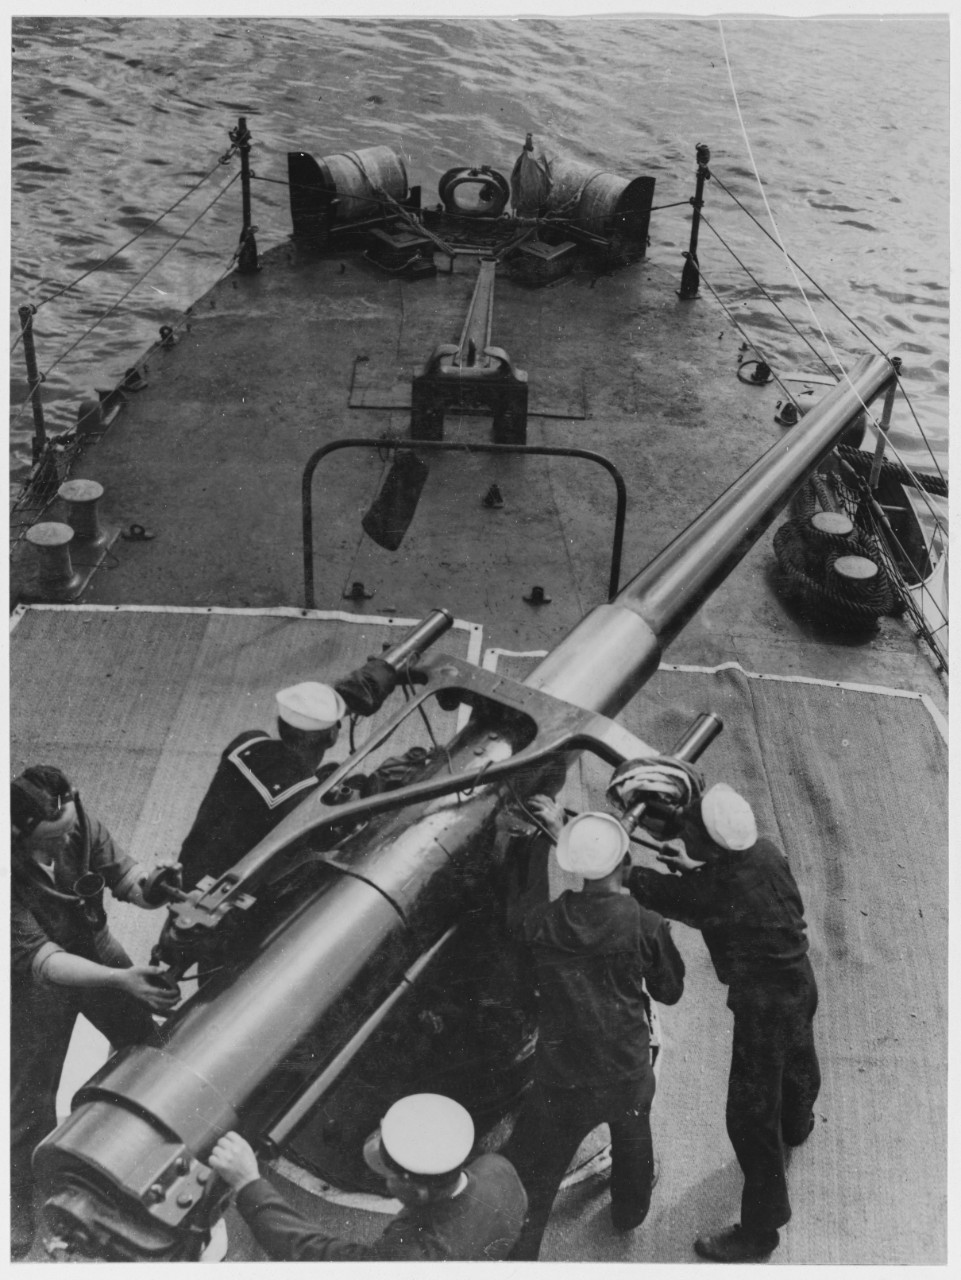 American sailors at gun drill on Destroyer. 4"/50